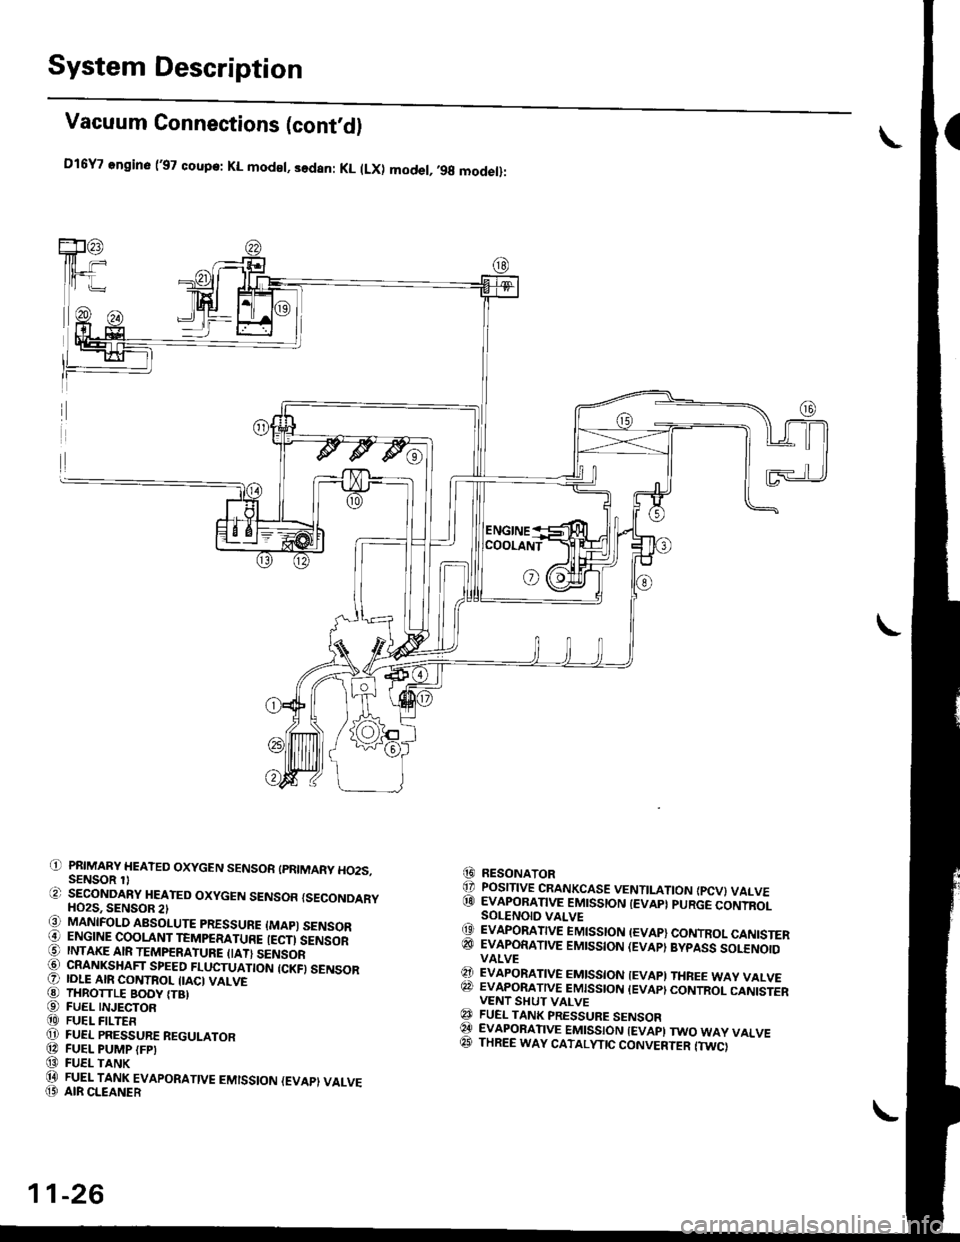 HONDA CIVIC 1998 6.G Workshop Manual System Description
Vacuum Connections (contd)
Dl6Y7 angin6 (97 coup.: KL mod€l, sedan: KL (LX) model,,9g modet):
i1] PRIMARY HEATED OXYGEN SENSOR (PRIMARY HO2S,SENSOR 1)E) SECONDARY HEATED OXYGEN 